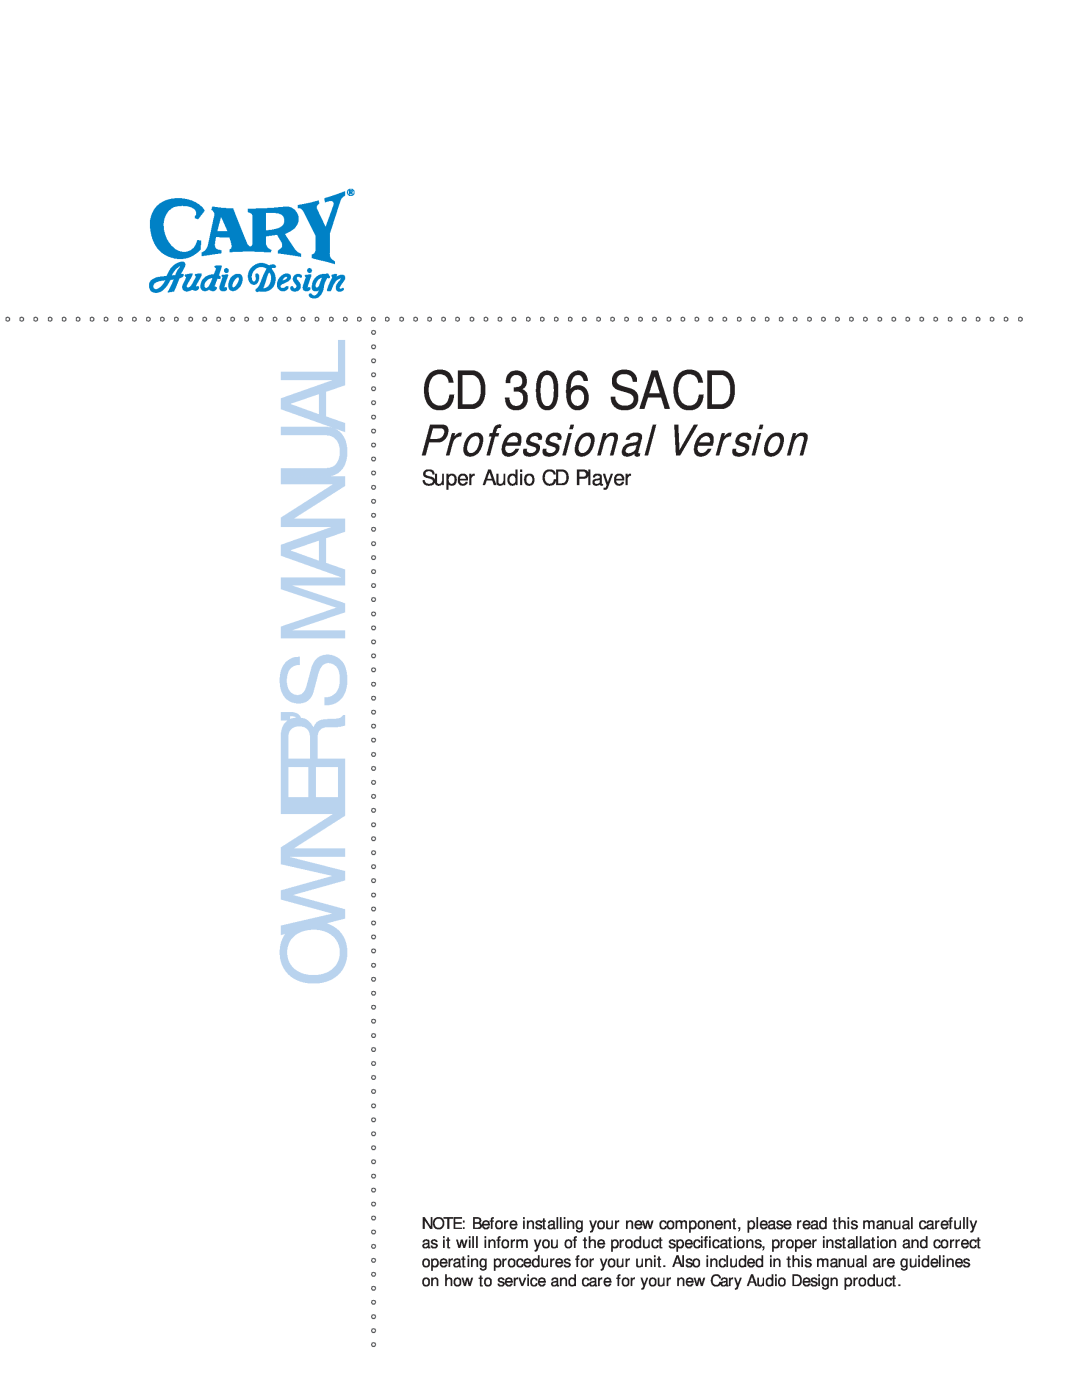 Cary Audio Design CD306SACD owner manual Owner’S Manual, CD 306 SACD, Professional Version, Super Audio CD Player 